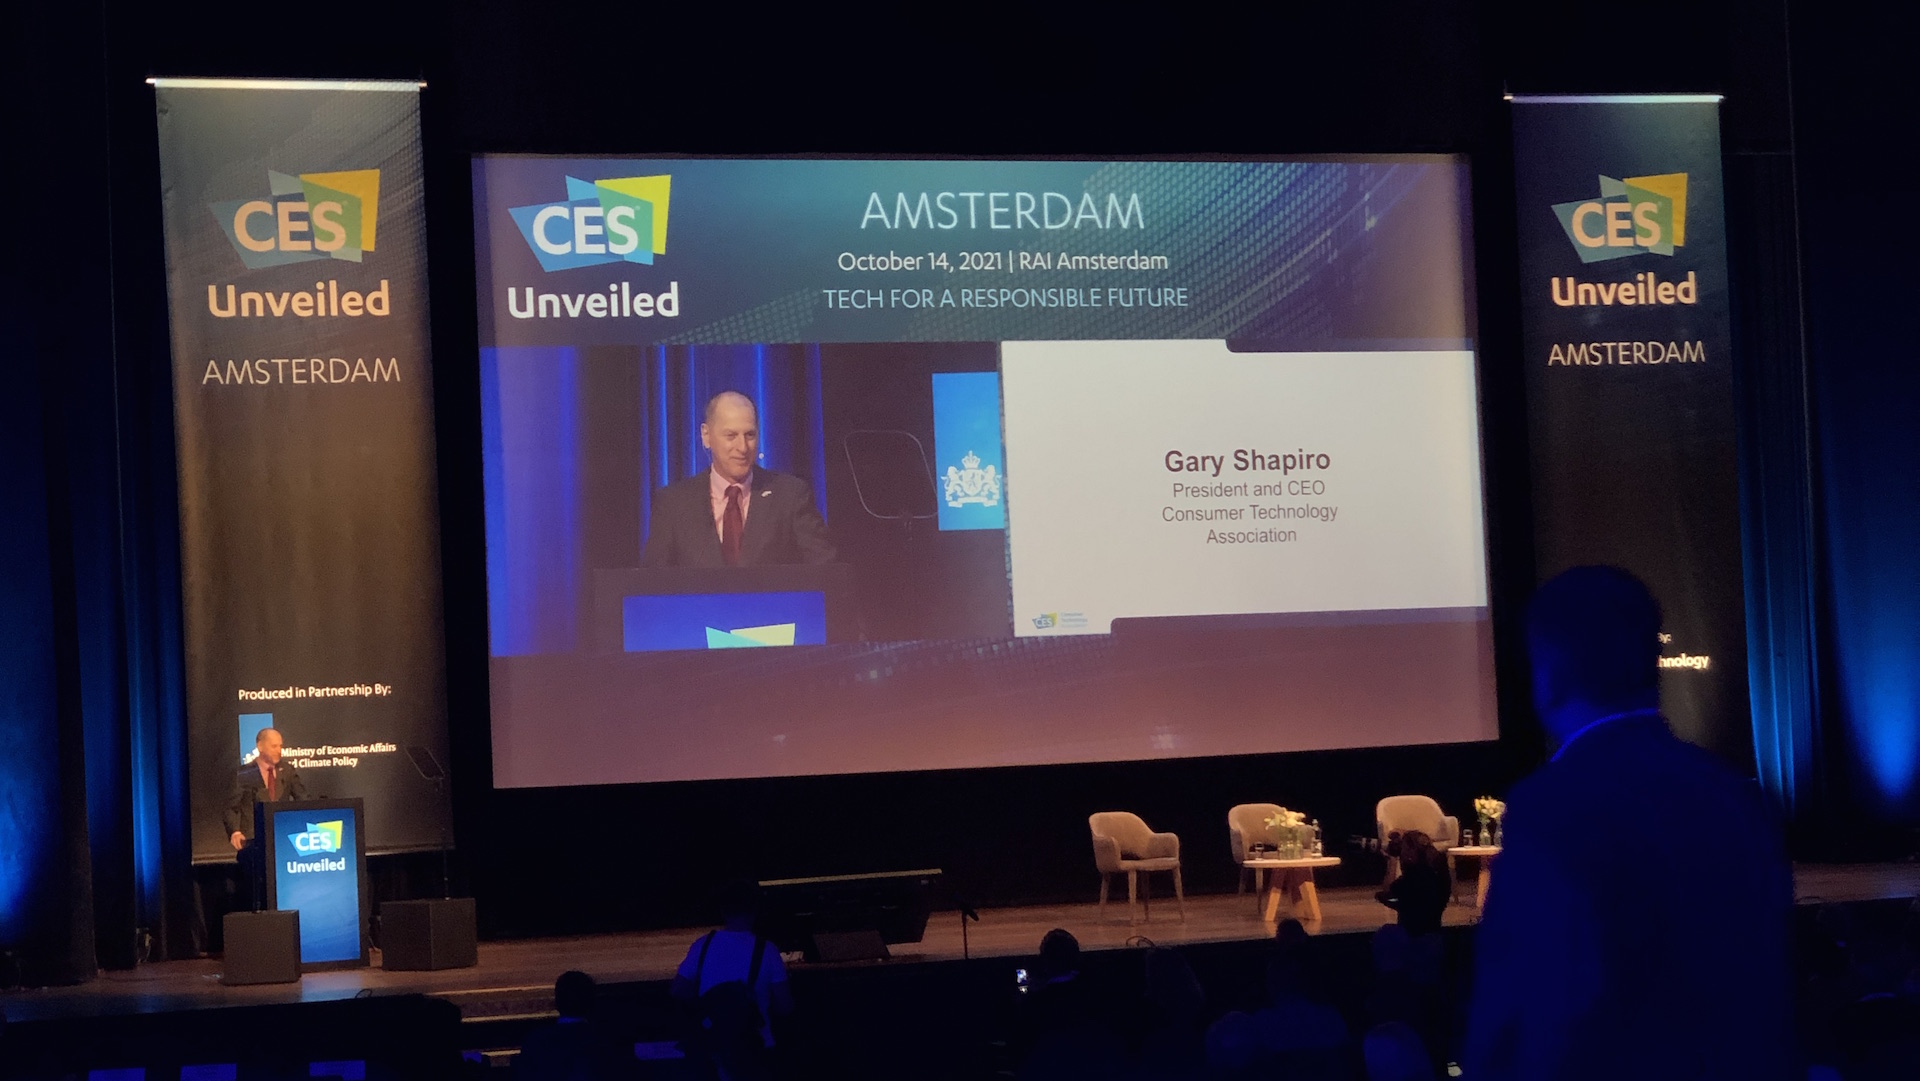 CES Unveiled Amsterdam 2021 - 4